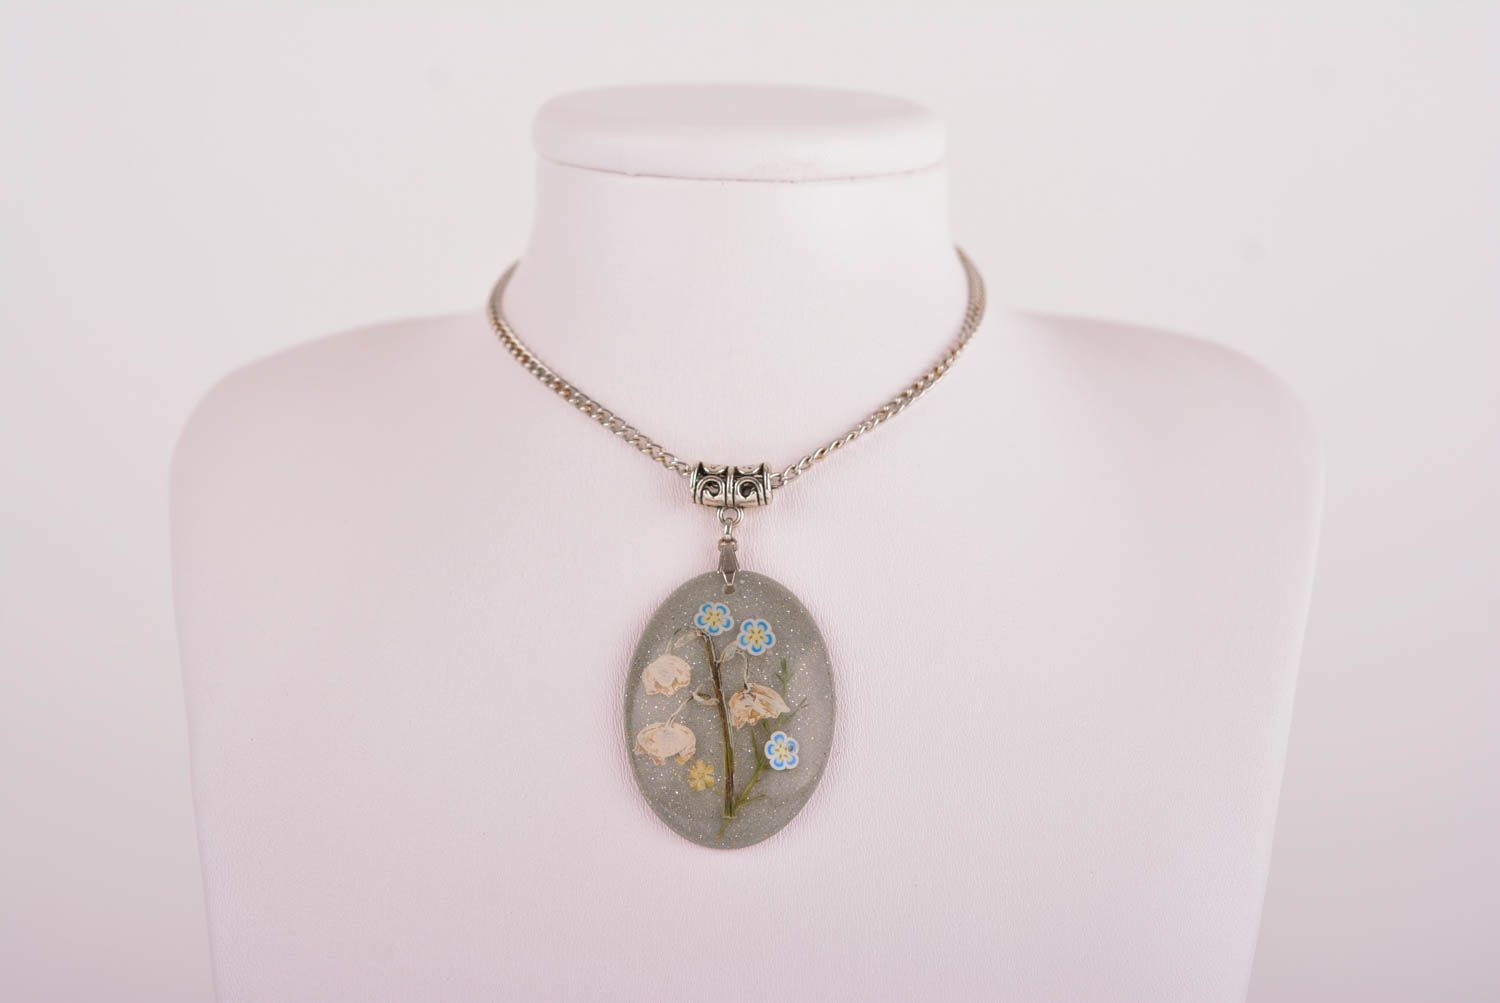 Handmade pendant epoxy resin jewelry gift ideas unusual pendant gift for her photo 2